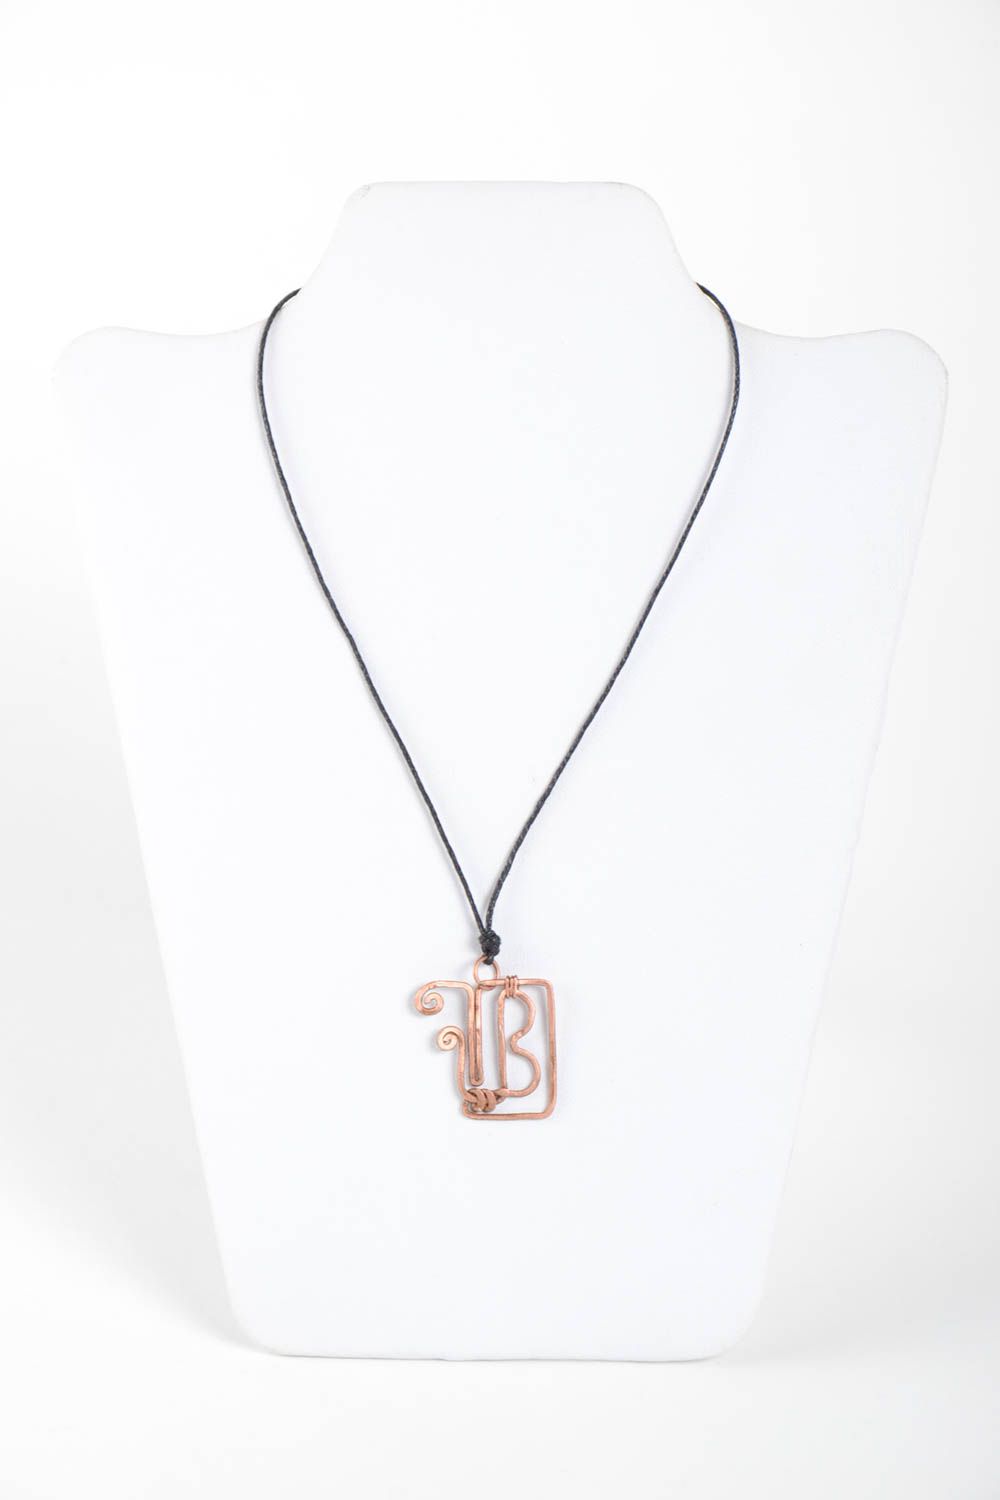 Designer copper pendant handmade pendant wire wrap jewelry stylish accessories photo 2